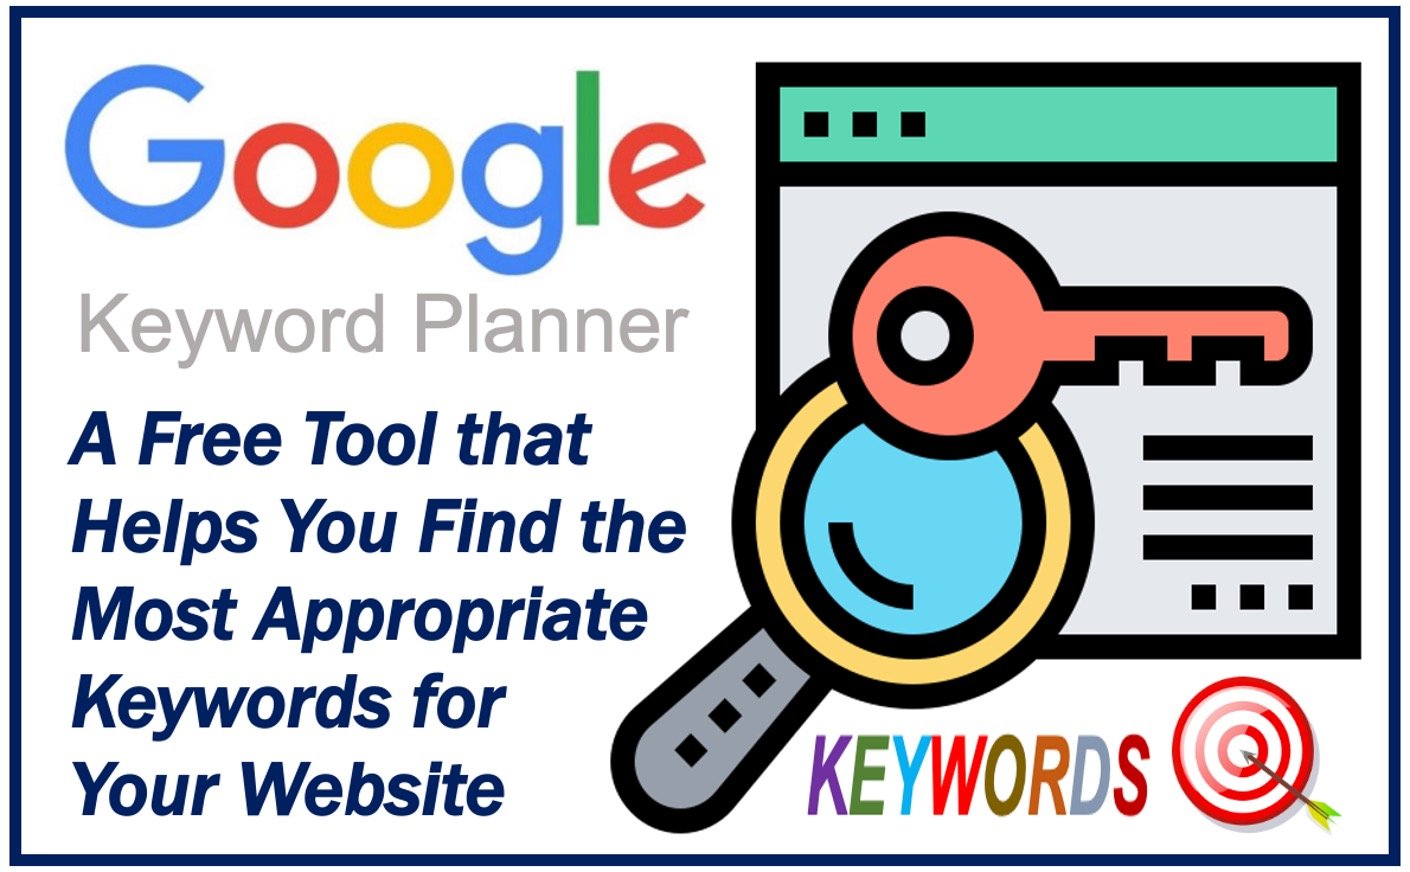 Google Keyword Planner - image explaining what it is